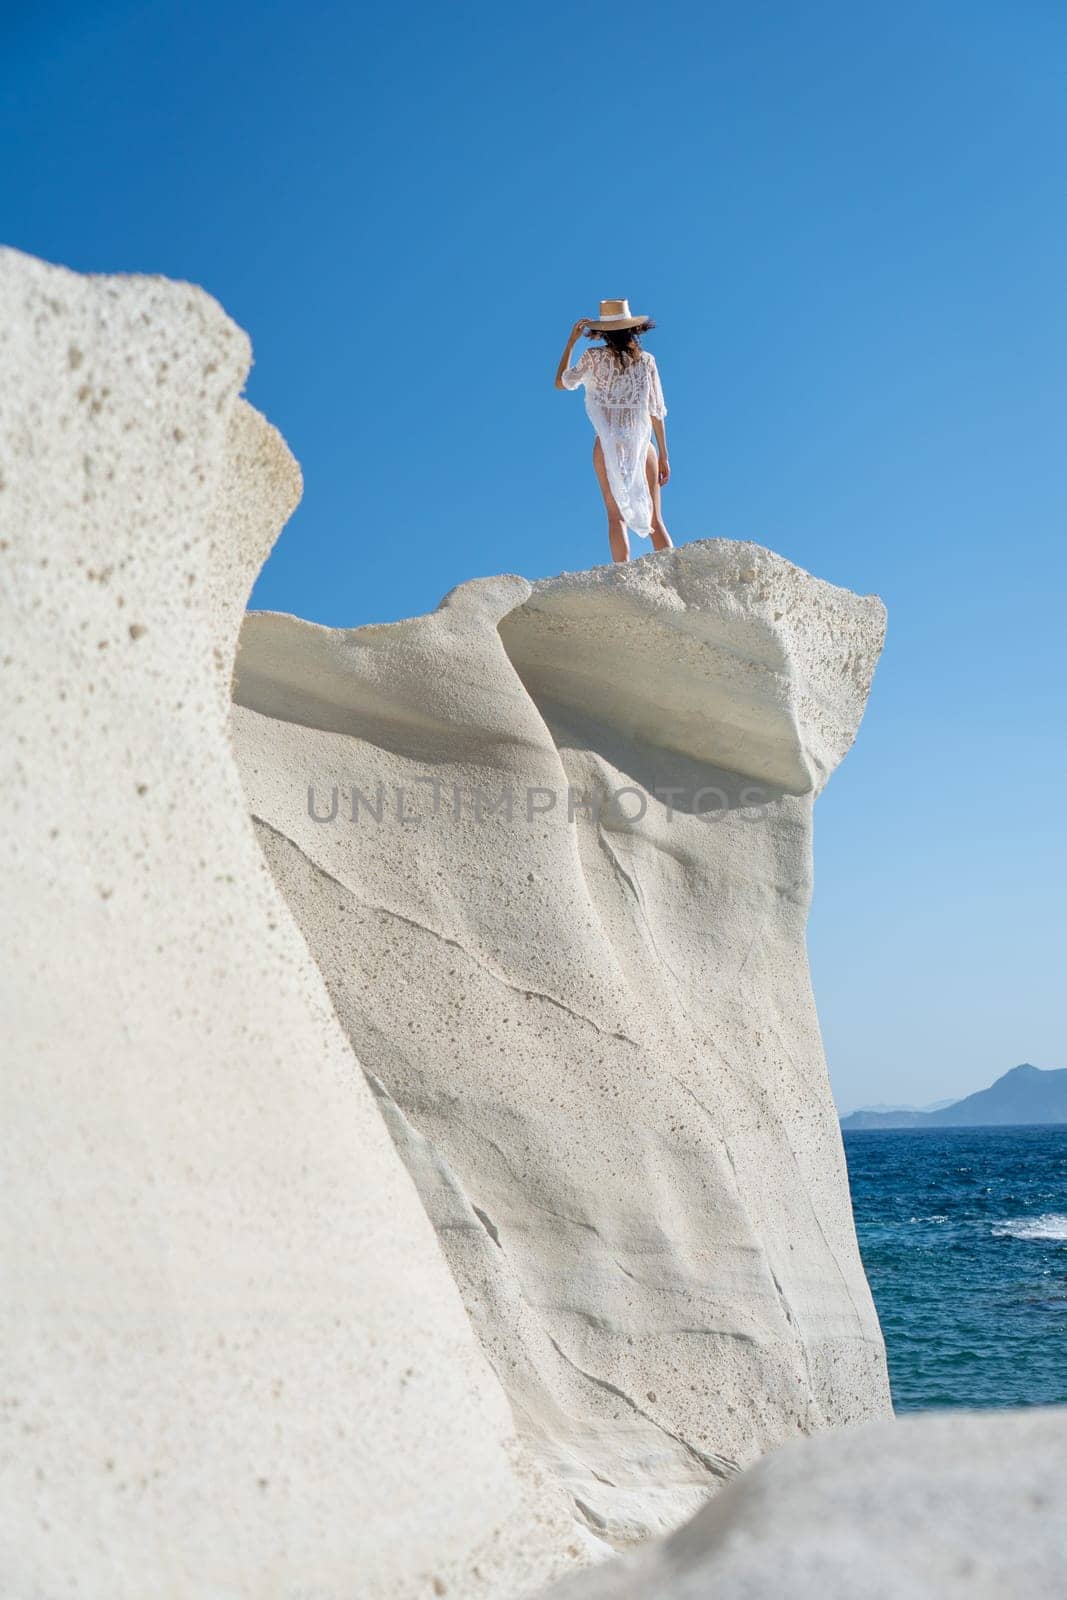 Model on top of a cliff in Sarakiniko, Milos Island